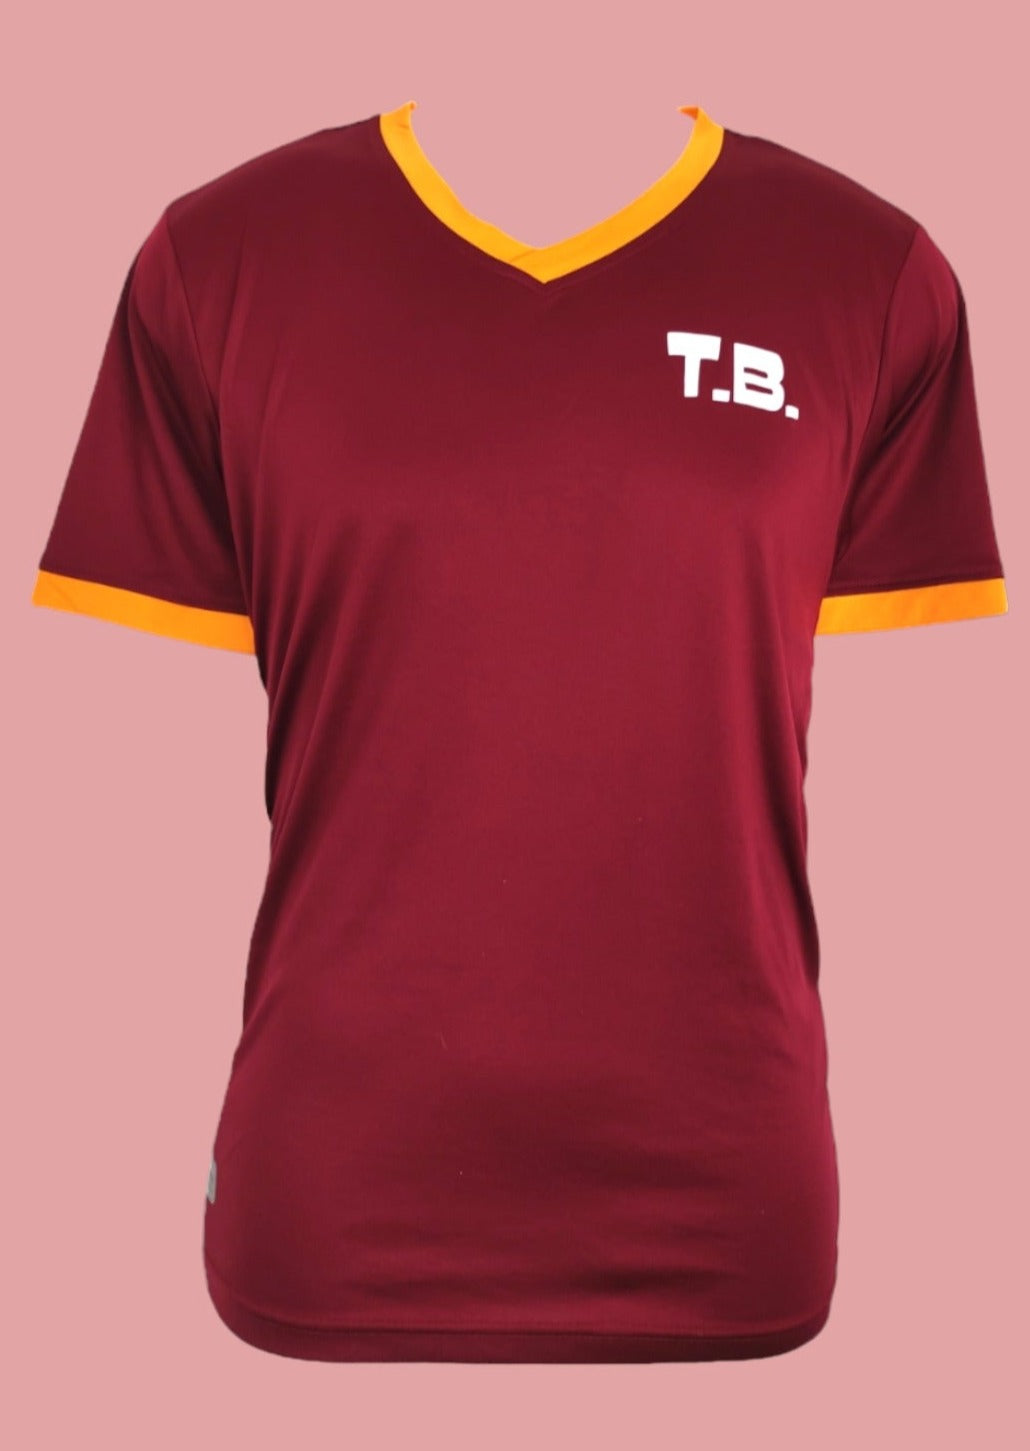 Aνδρική Αθλητική Mπλούζα - T-Shirt  ABC σε Μπορντό Χρώμα (Medium)